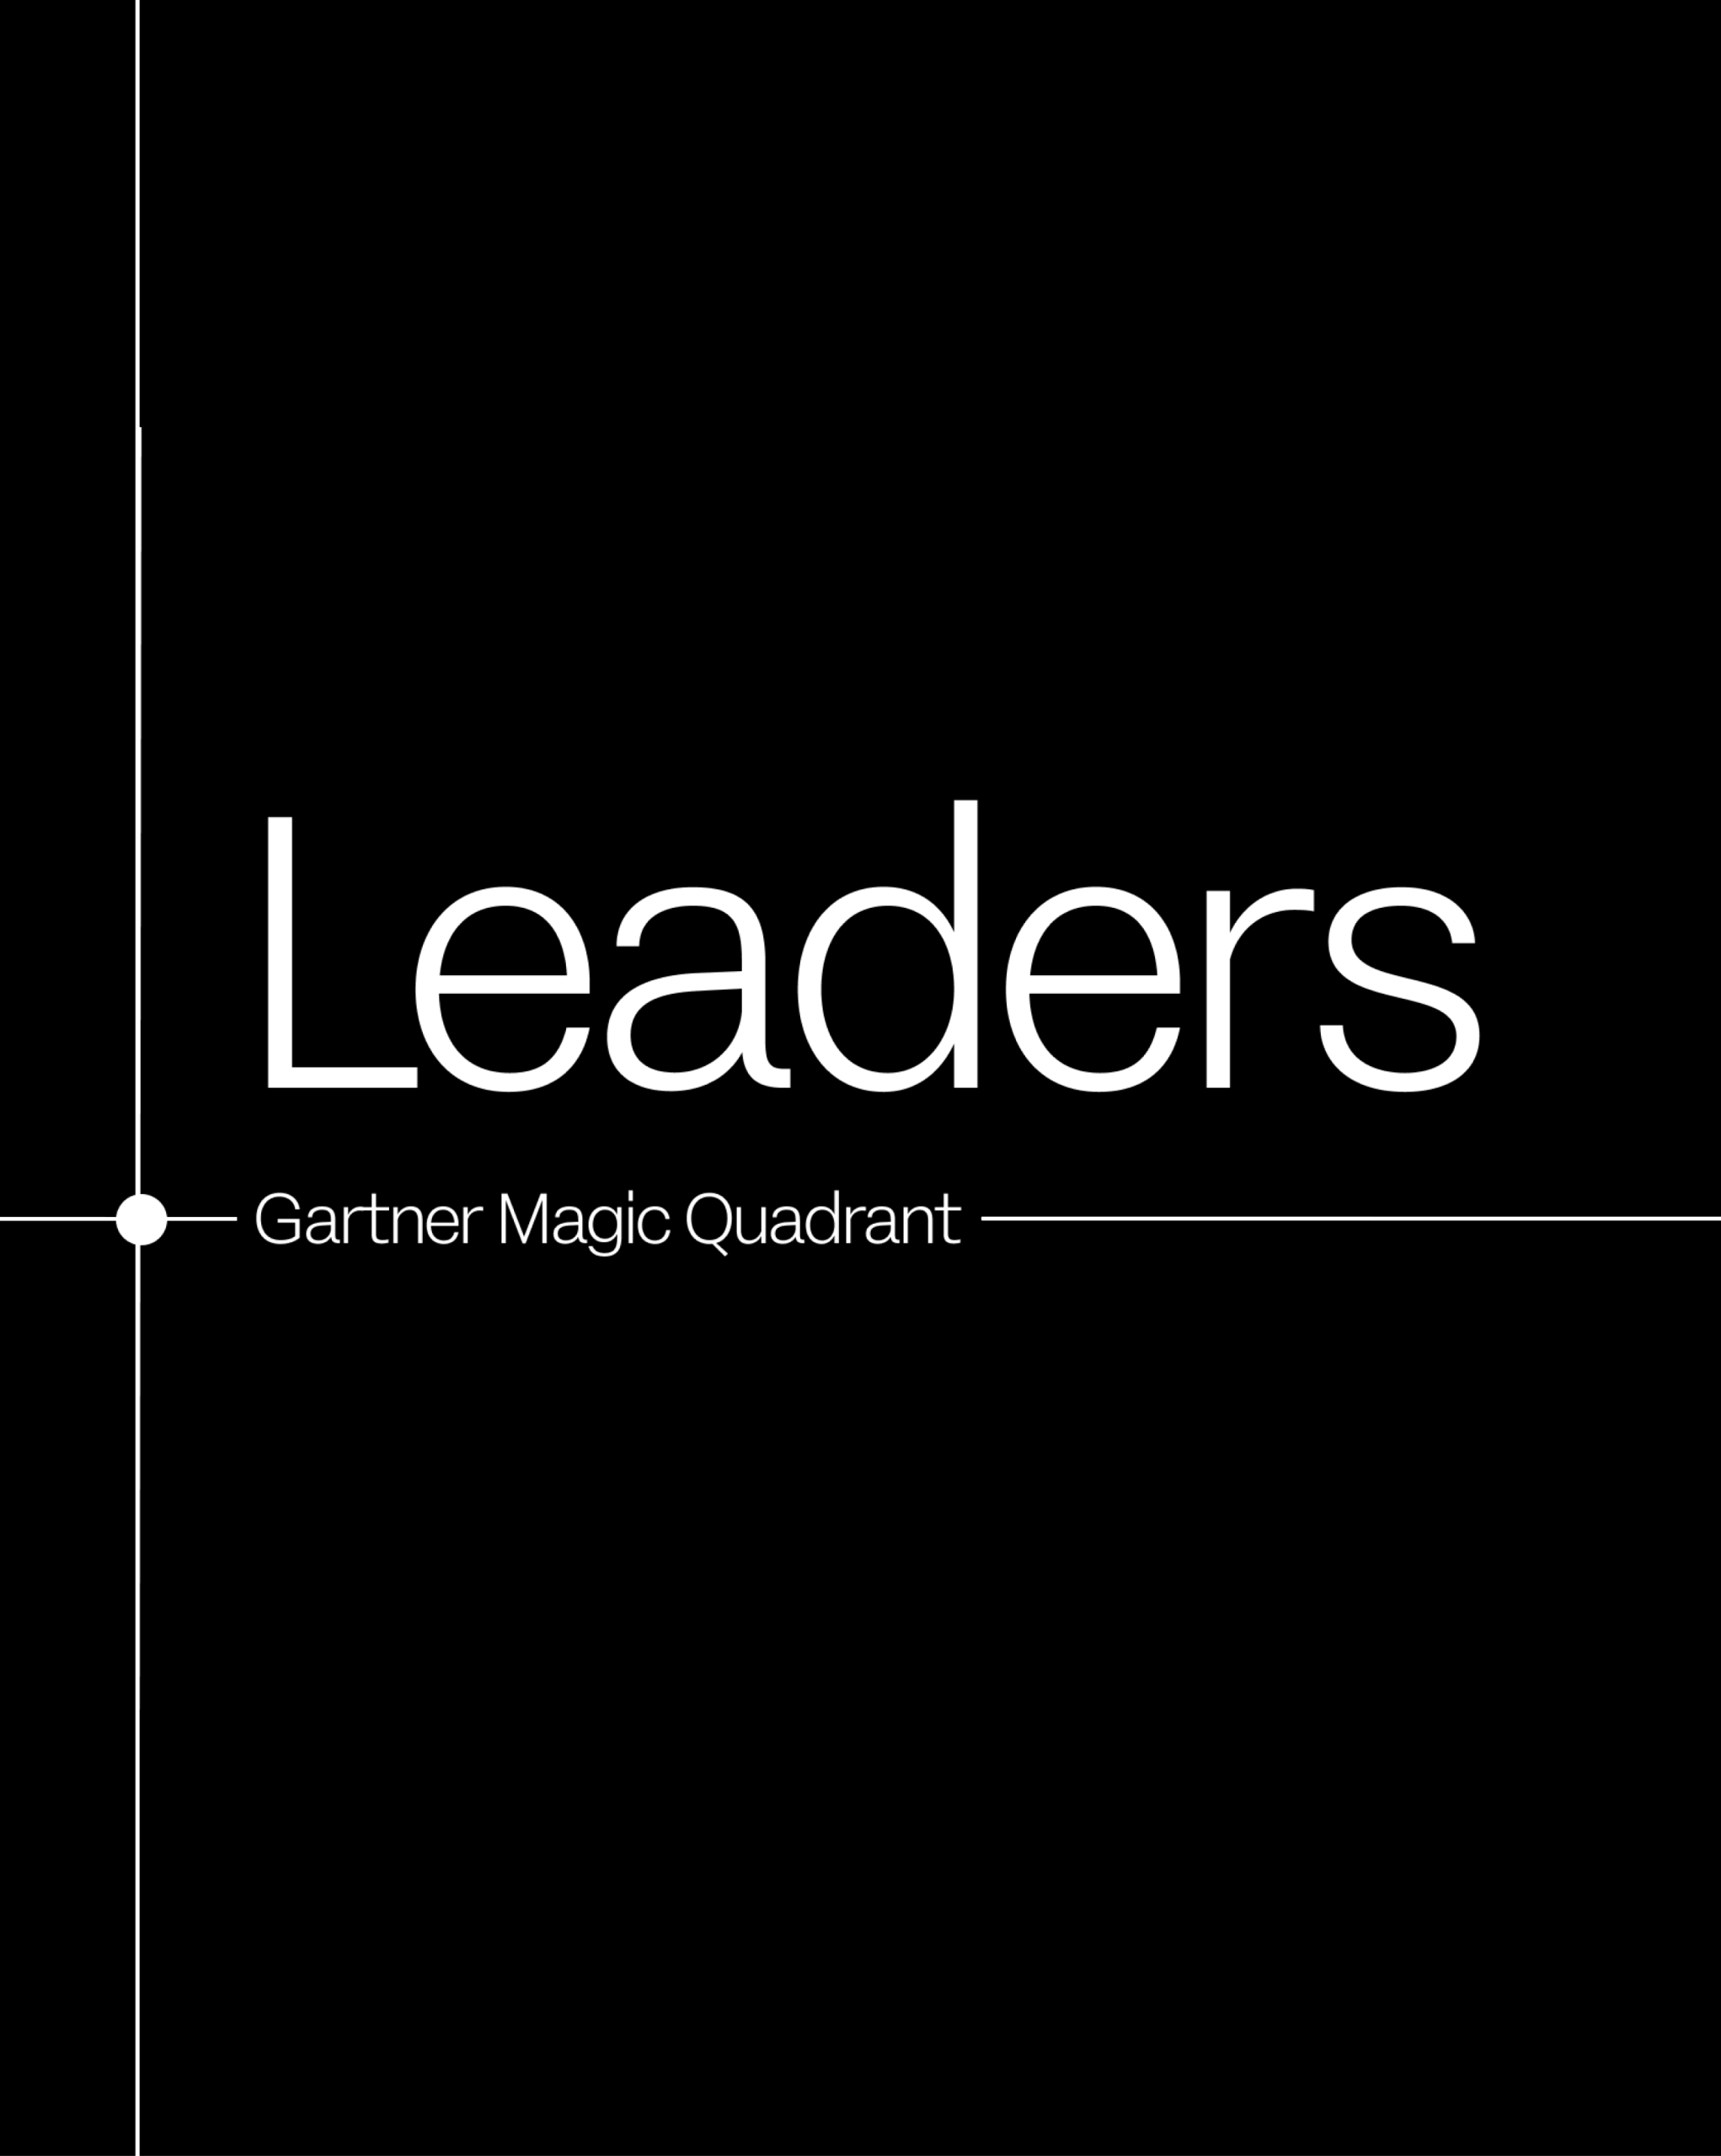 Leaders gartner header image